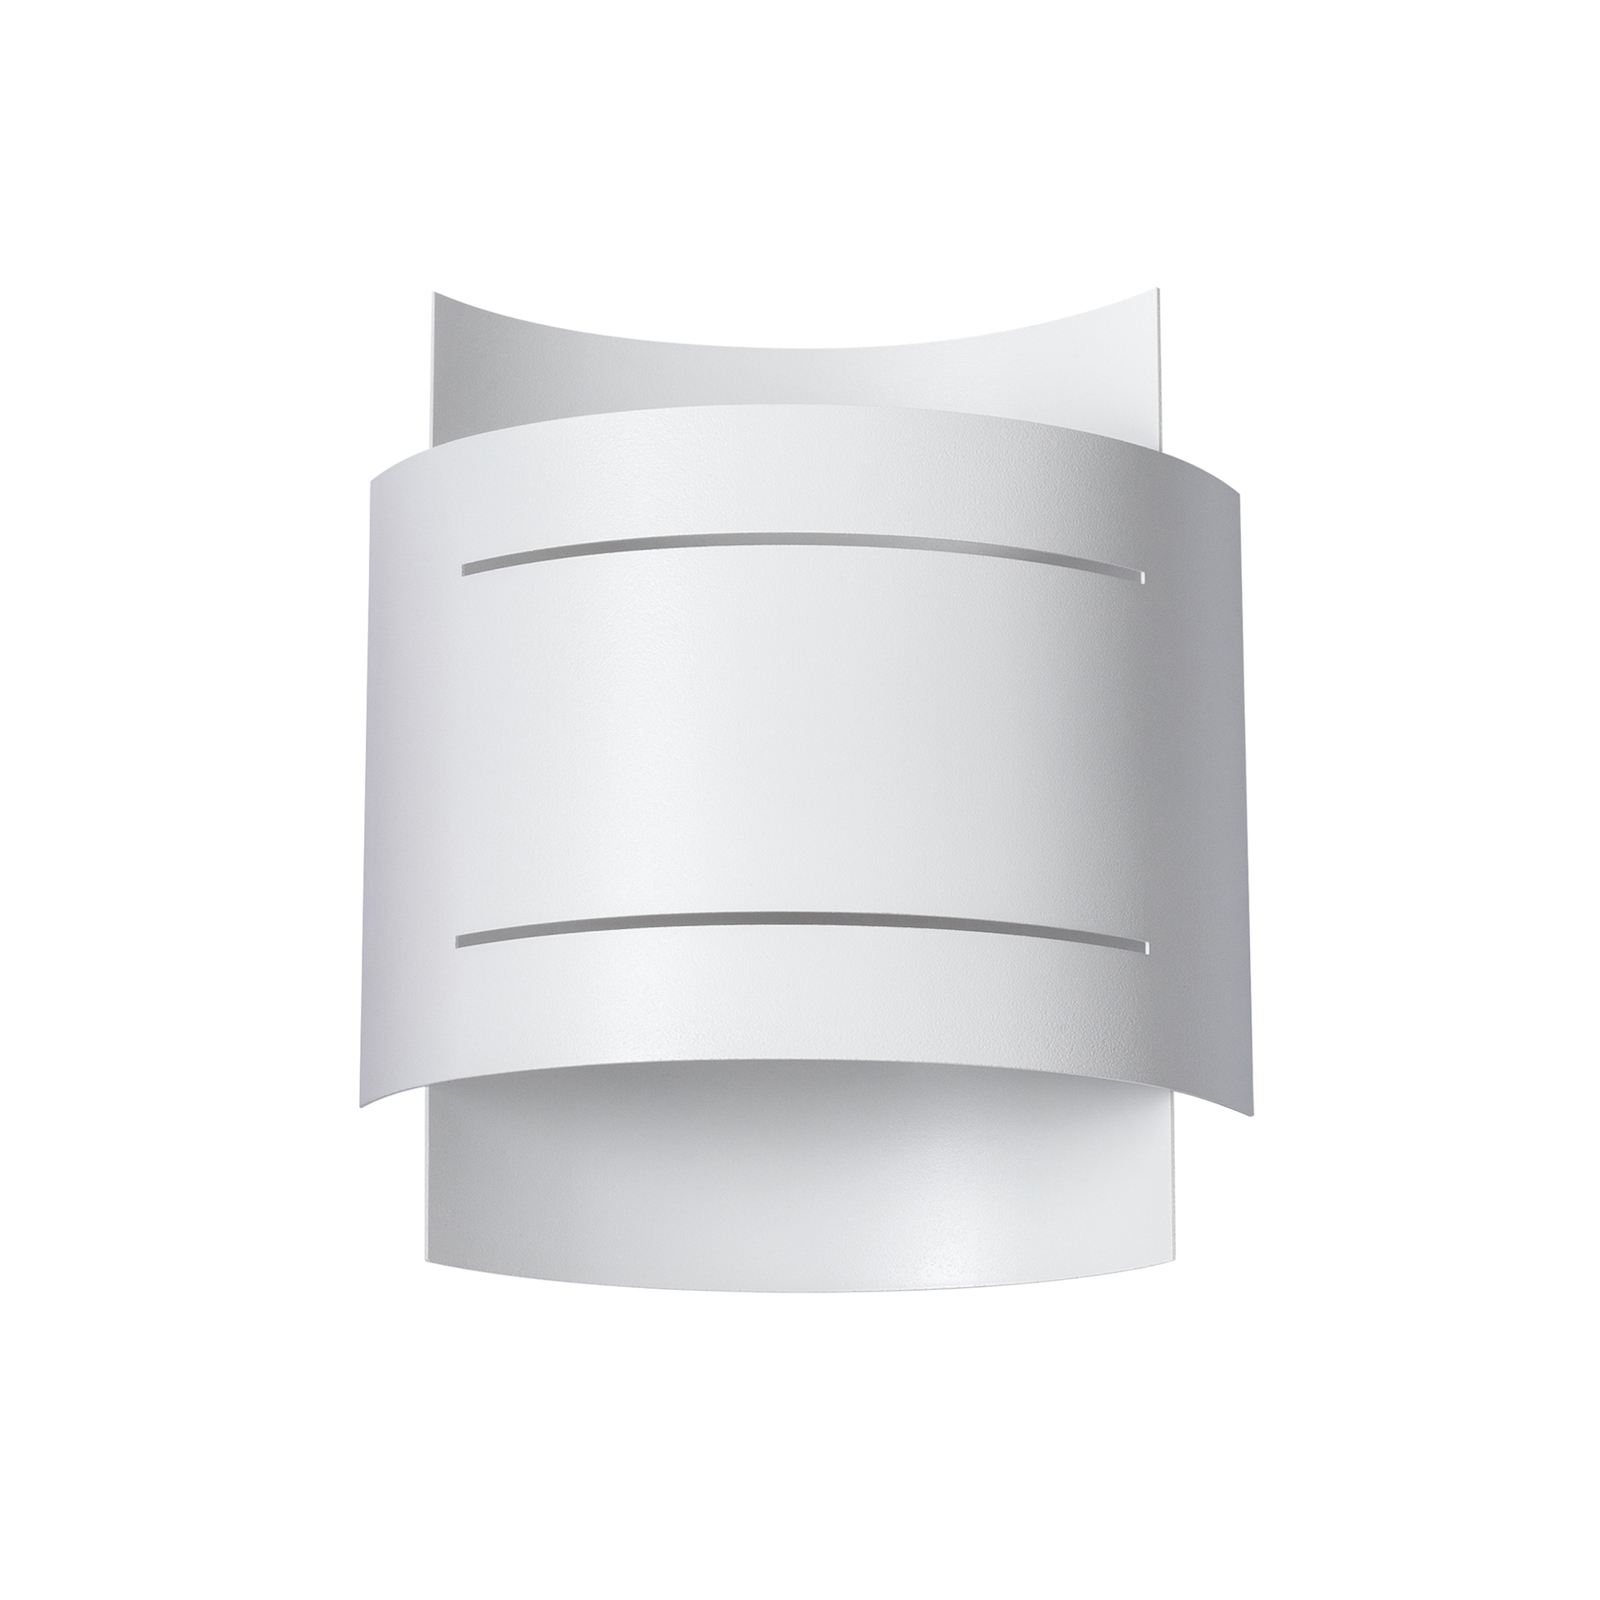 Euluna Isotta wall light, semicircular, white